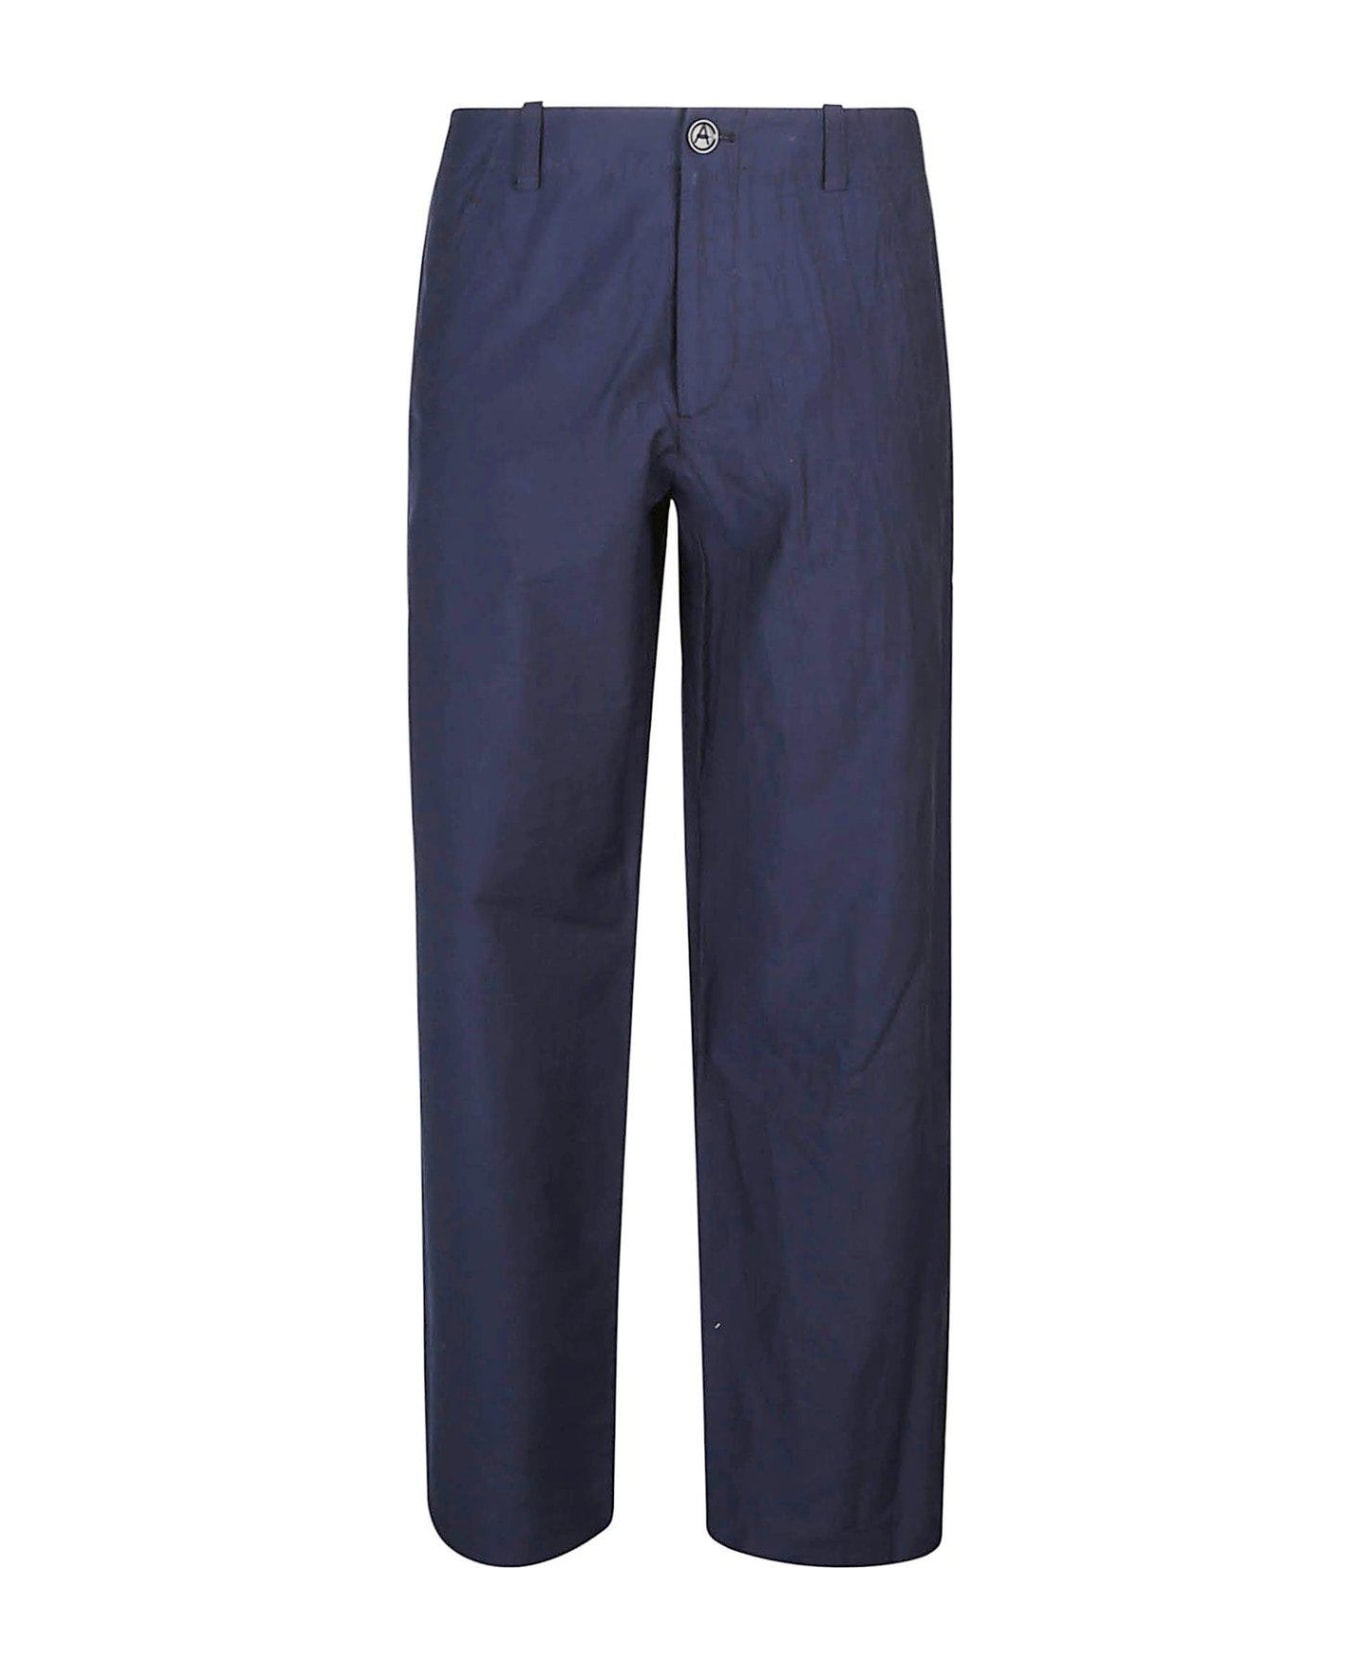 A.P.C. Mathurin Straight-leg Tailored Trousers Pants - DARK NAVY